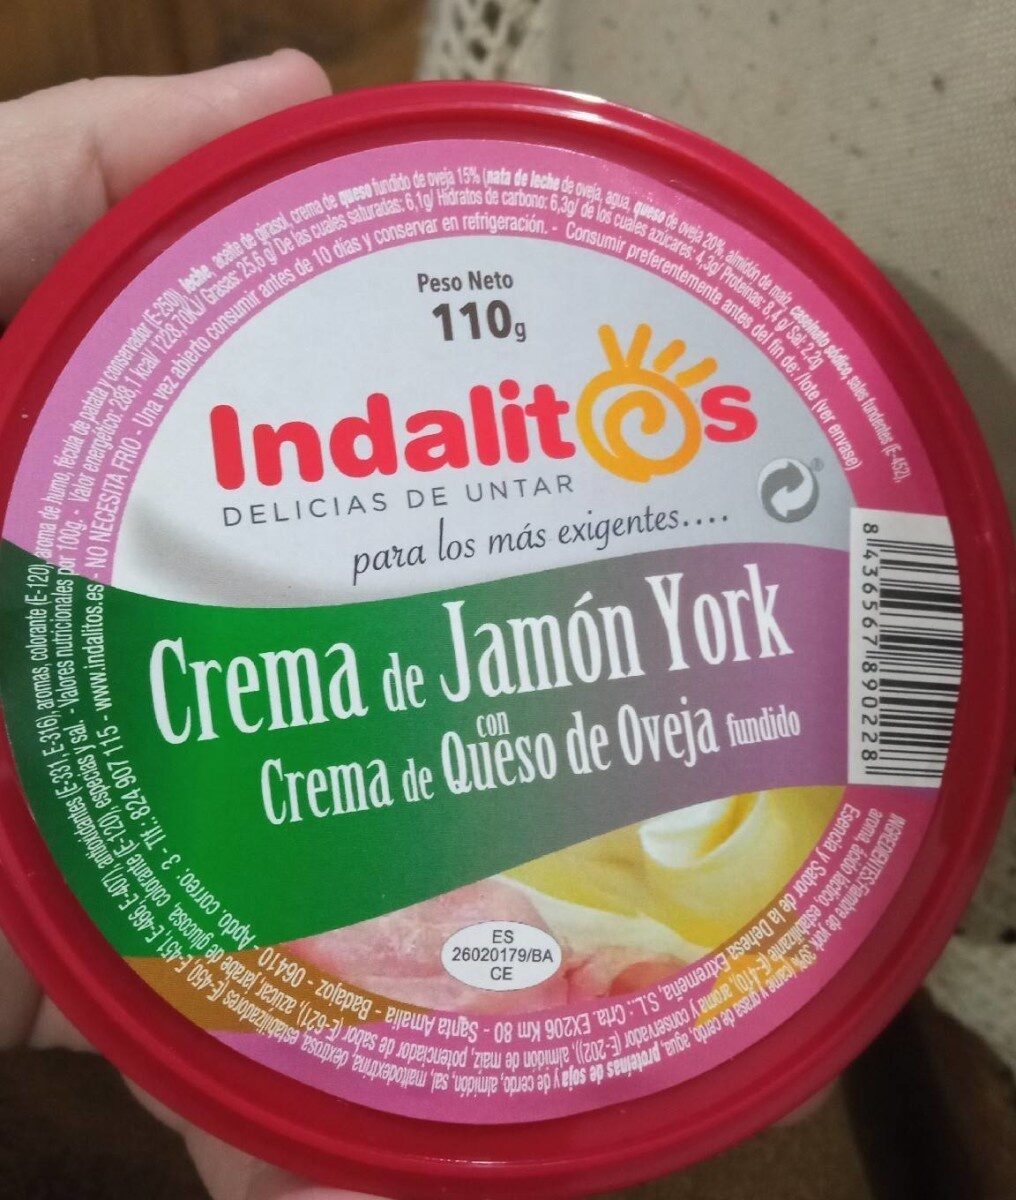 Crema de jamón York con crema de queso de oveja - Product - es